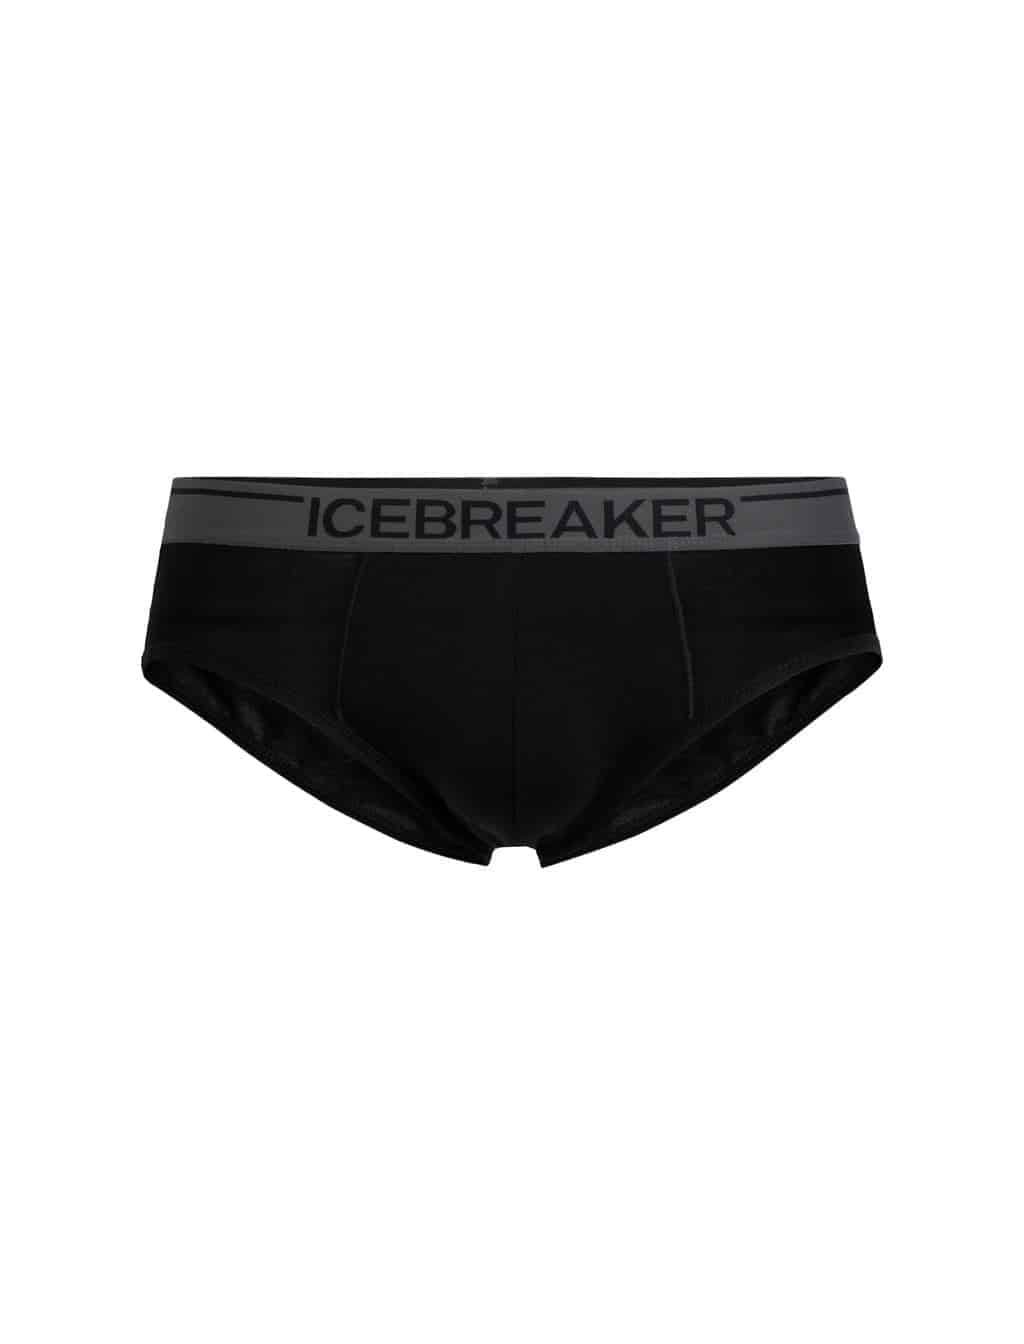 Icebreaker Men's Anatomica Boxers brief underwear - Merino wool